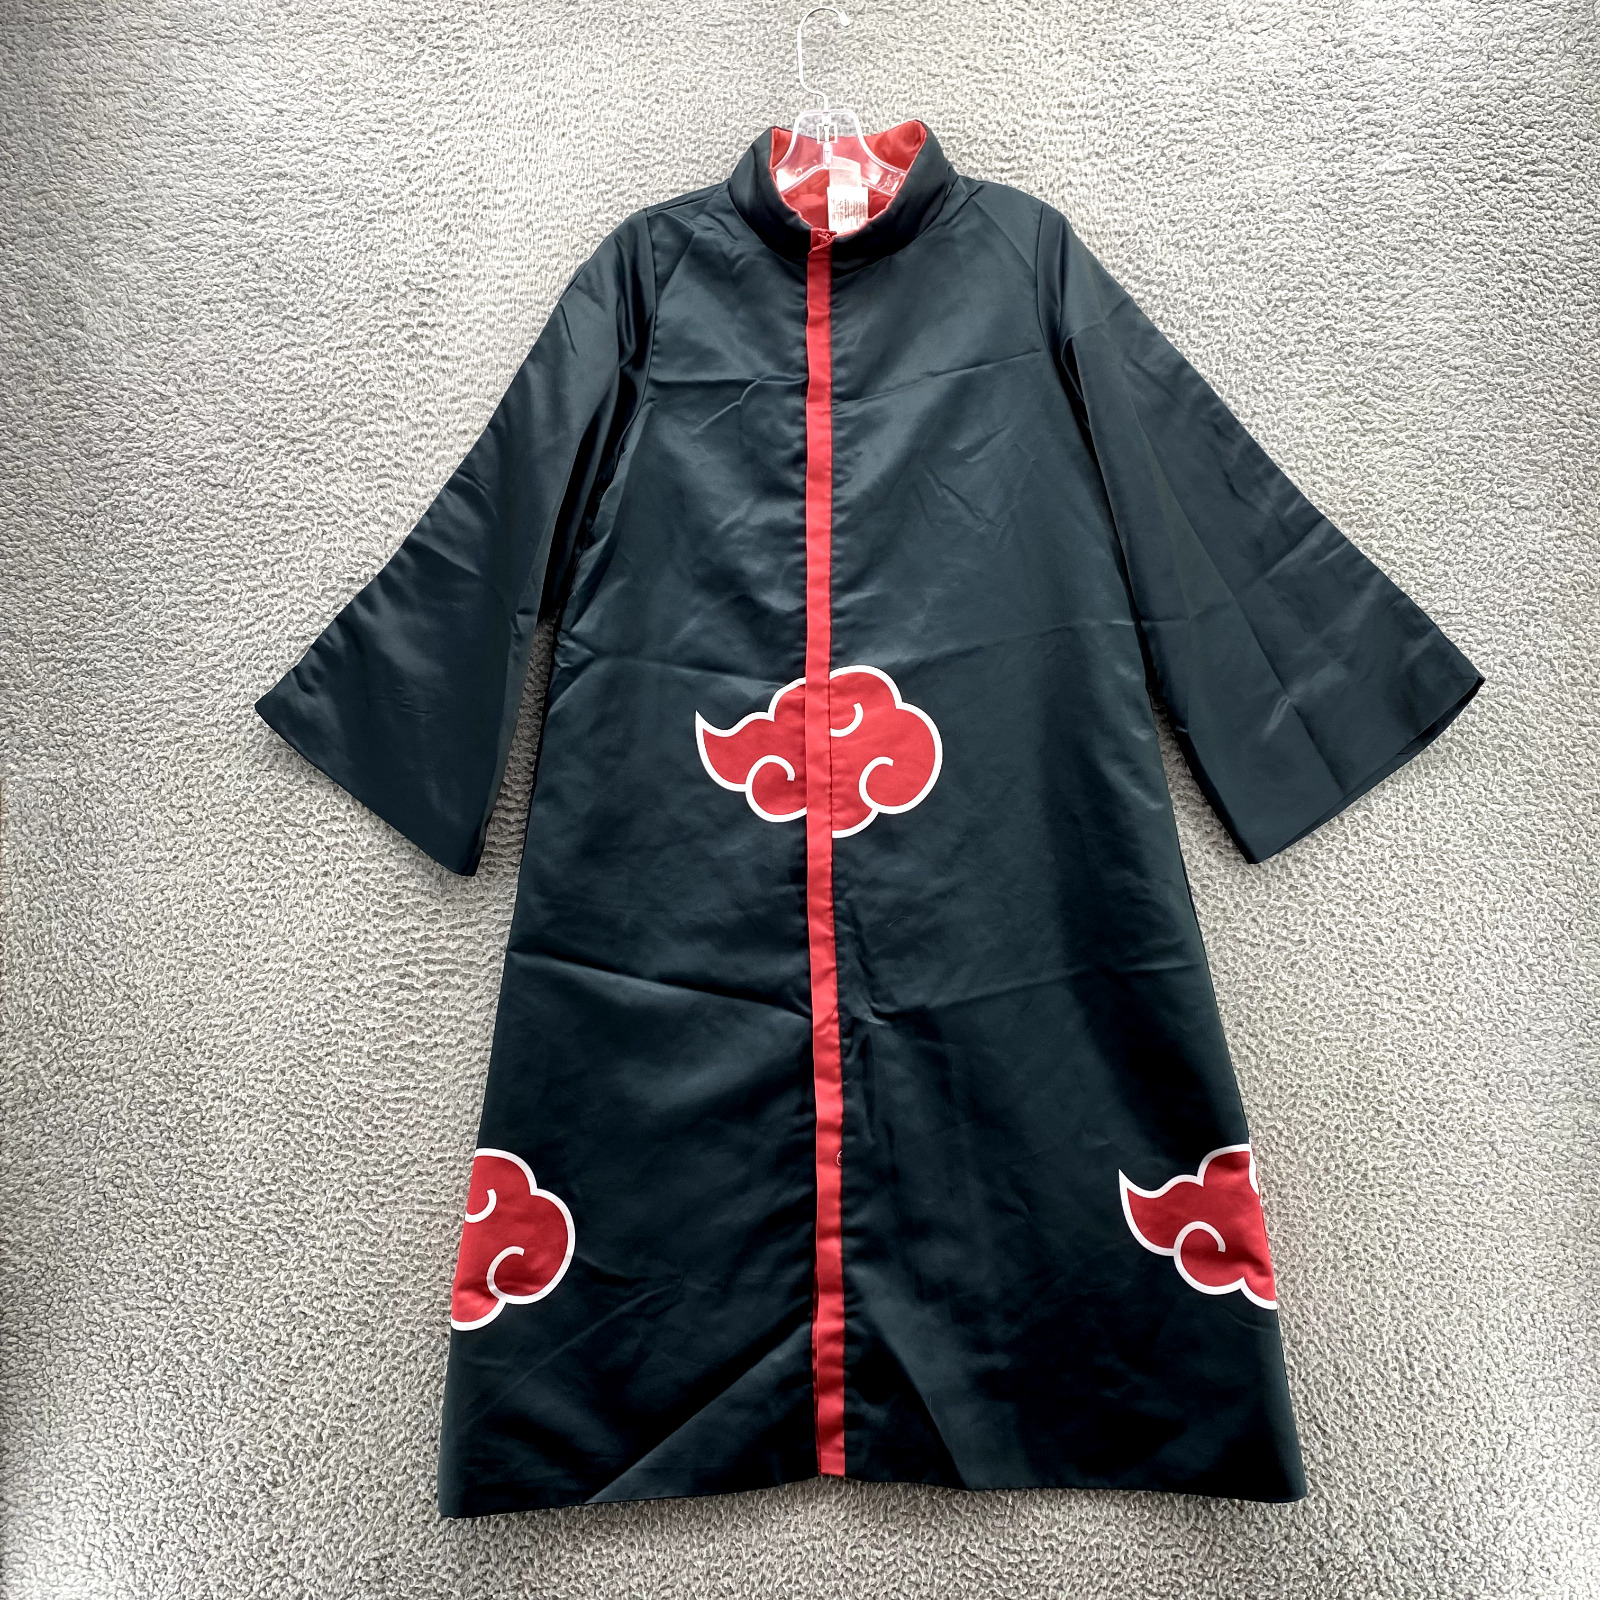 Naruto Shippuden Robe Sz L/XL Black Cloak Cosplay Anime Costume Coat Japan Men's